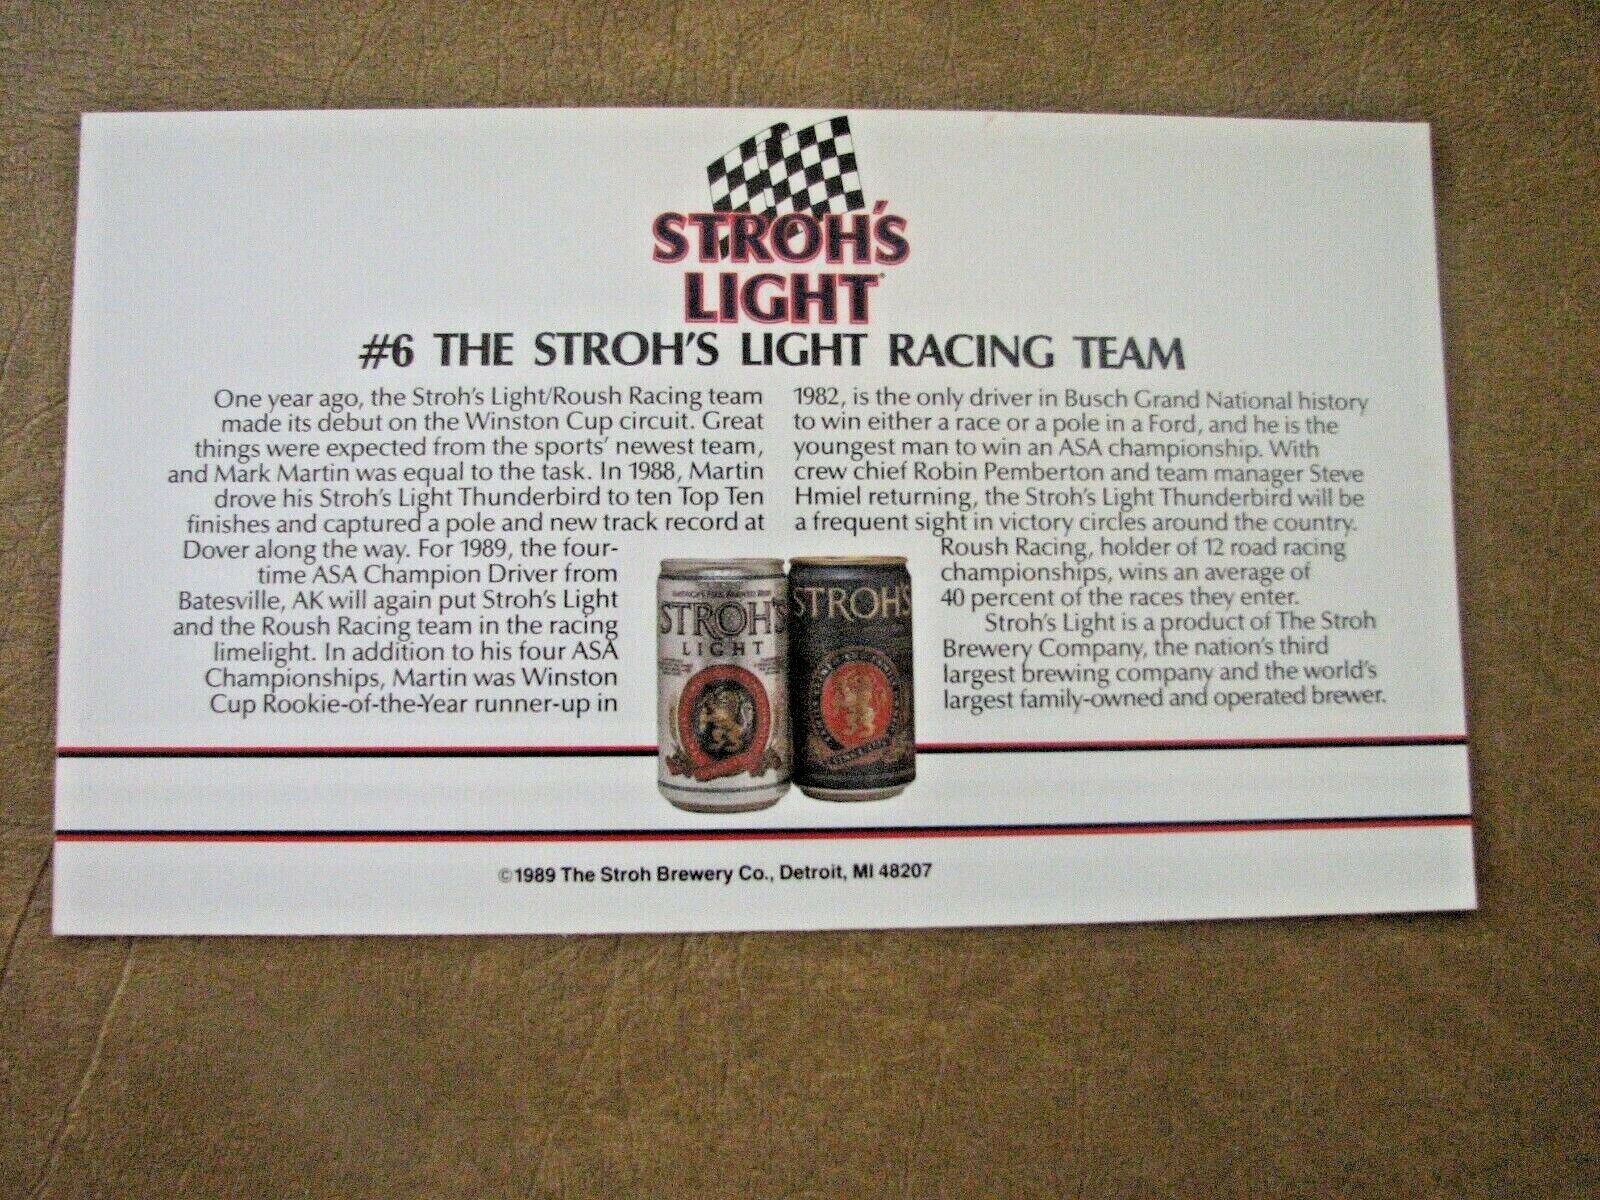 1989 Stroh's Mark Martin #6 Racing Team Photo Card 2 Sided (6 ea in a set) $5.00 Без бренда - фотография #8